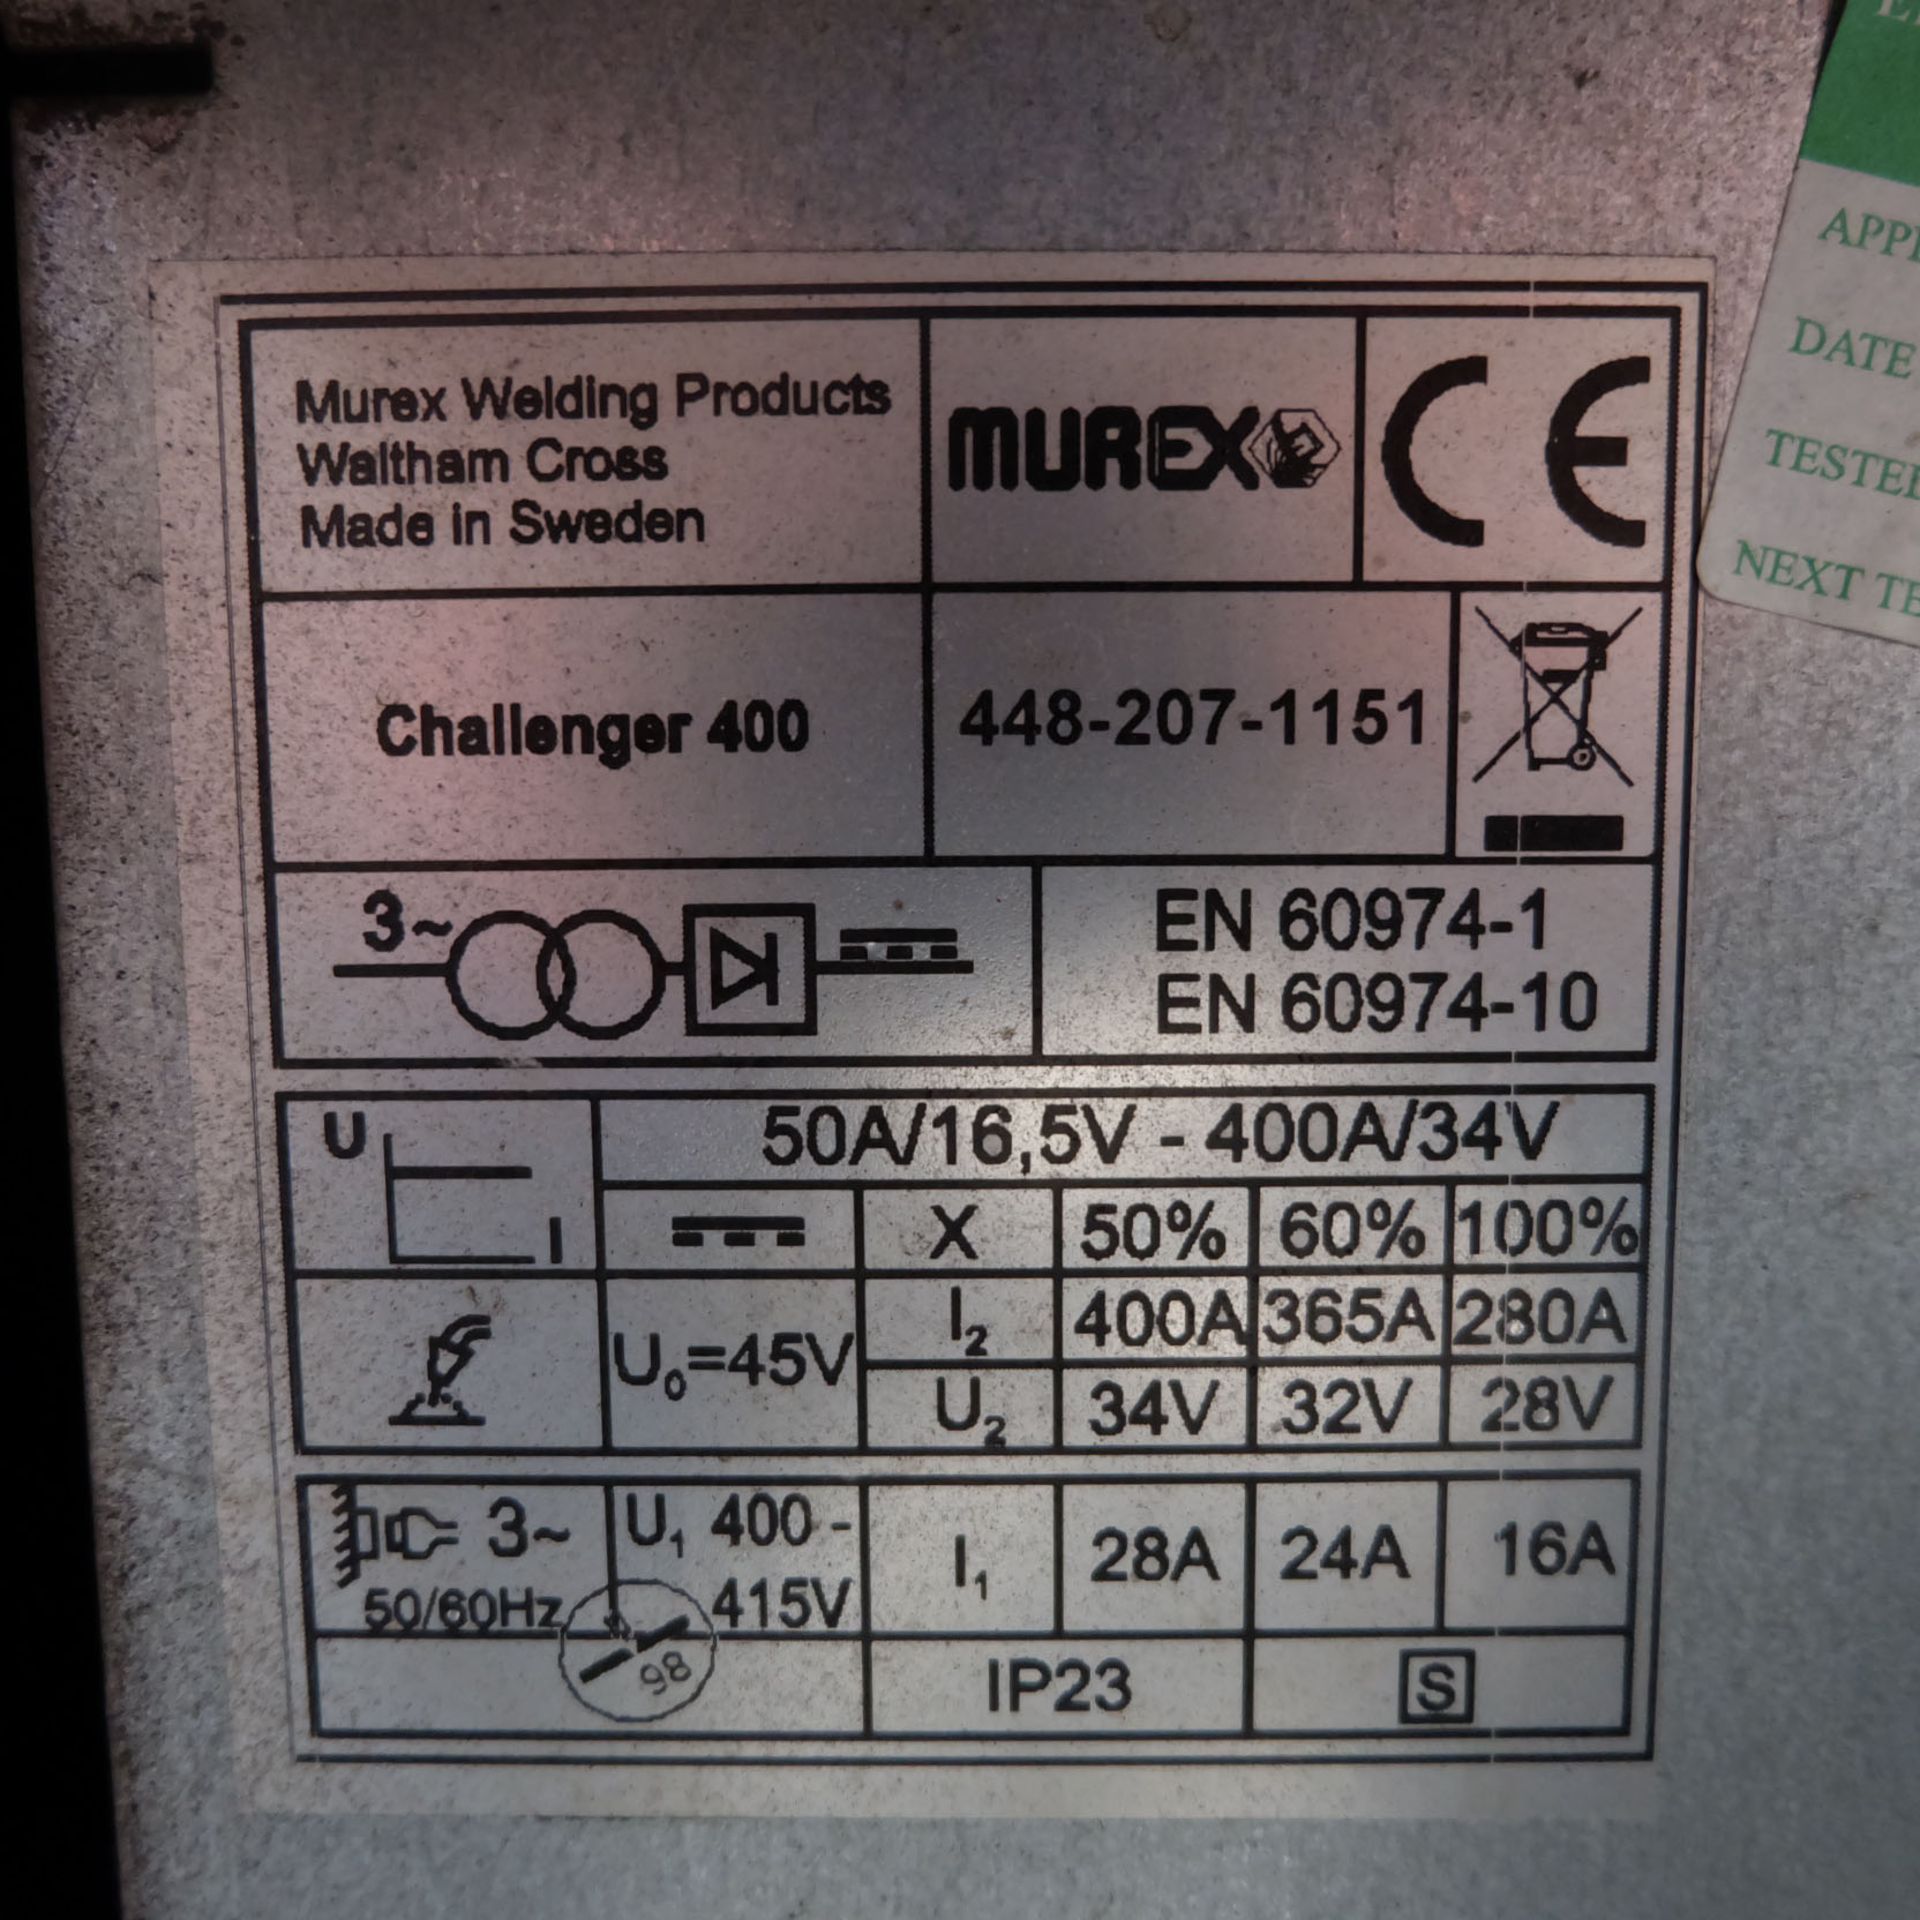 Murex Transweld Challenger 400 Mig Welder With Murex Wire Feed. - Image 7 of 9